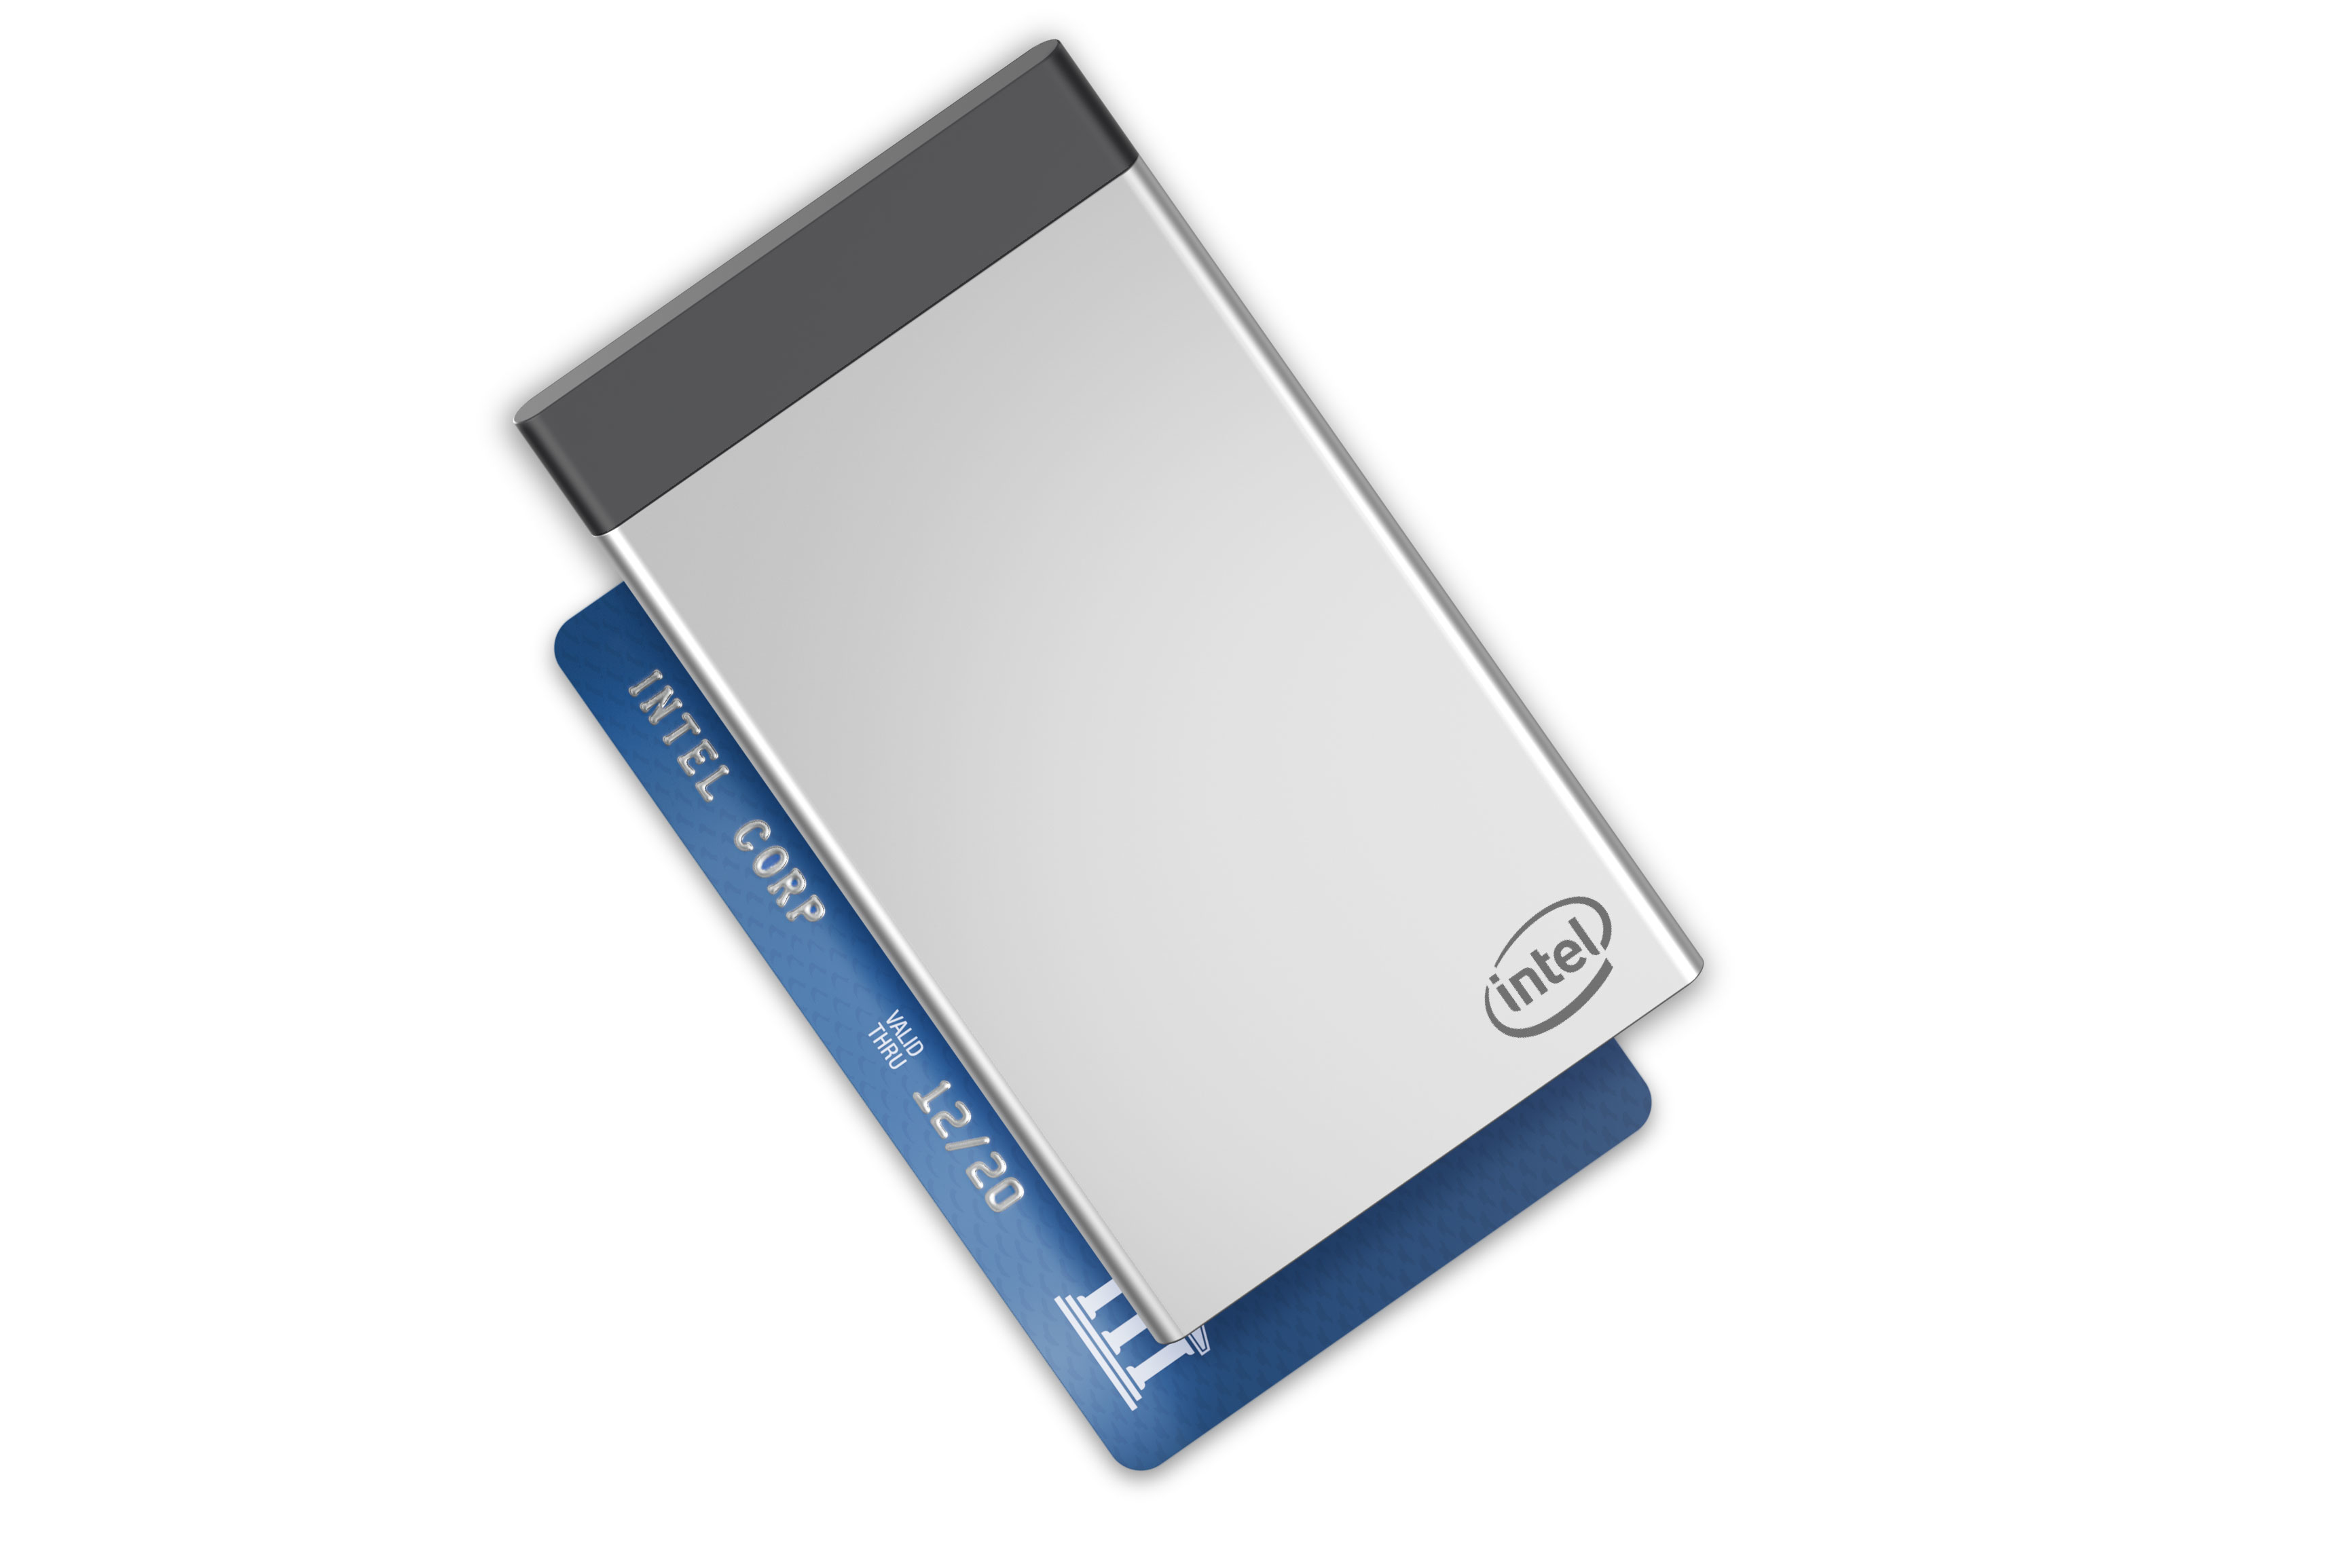 Intel Compute Card CD1IV128MK - Karte - Core i5 7Y57 / 1.2 GHz